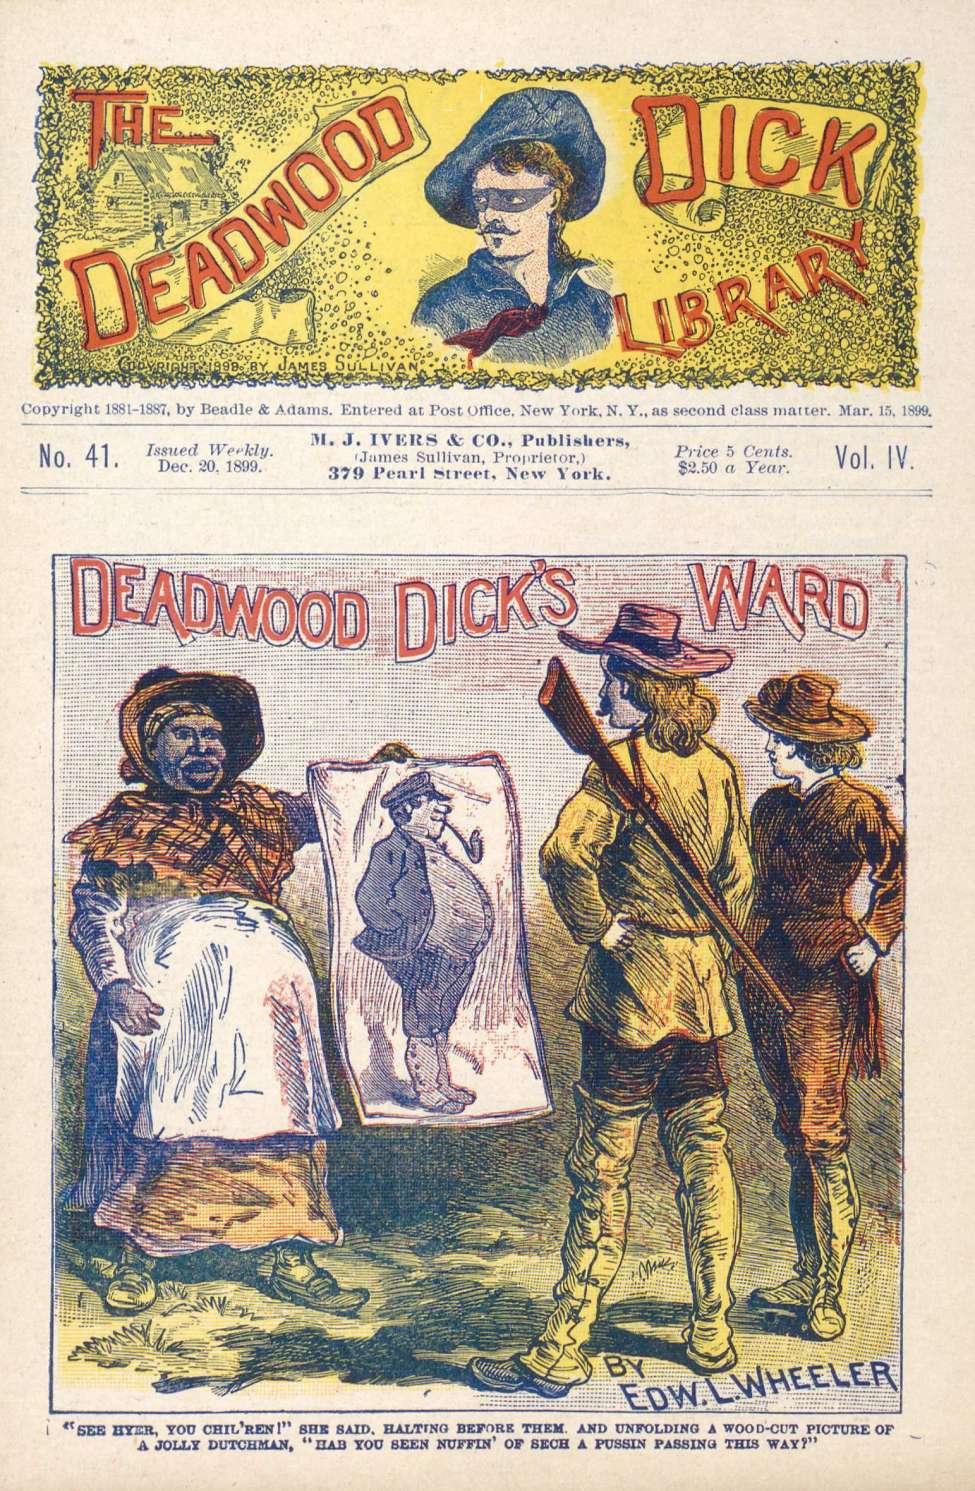 Book Cover For Deadwood Dick Library v4 41 - Deadwood Dick's Ward